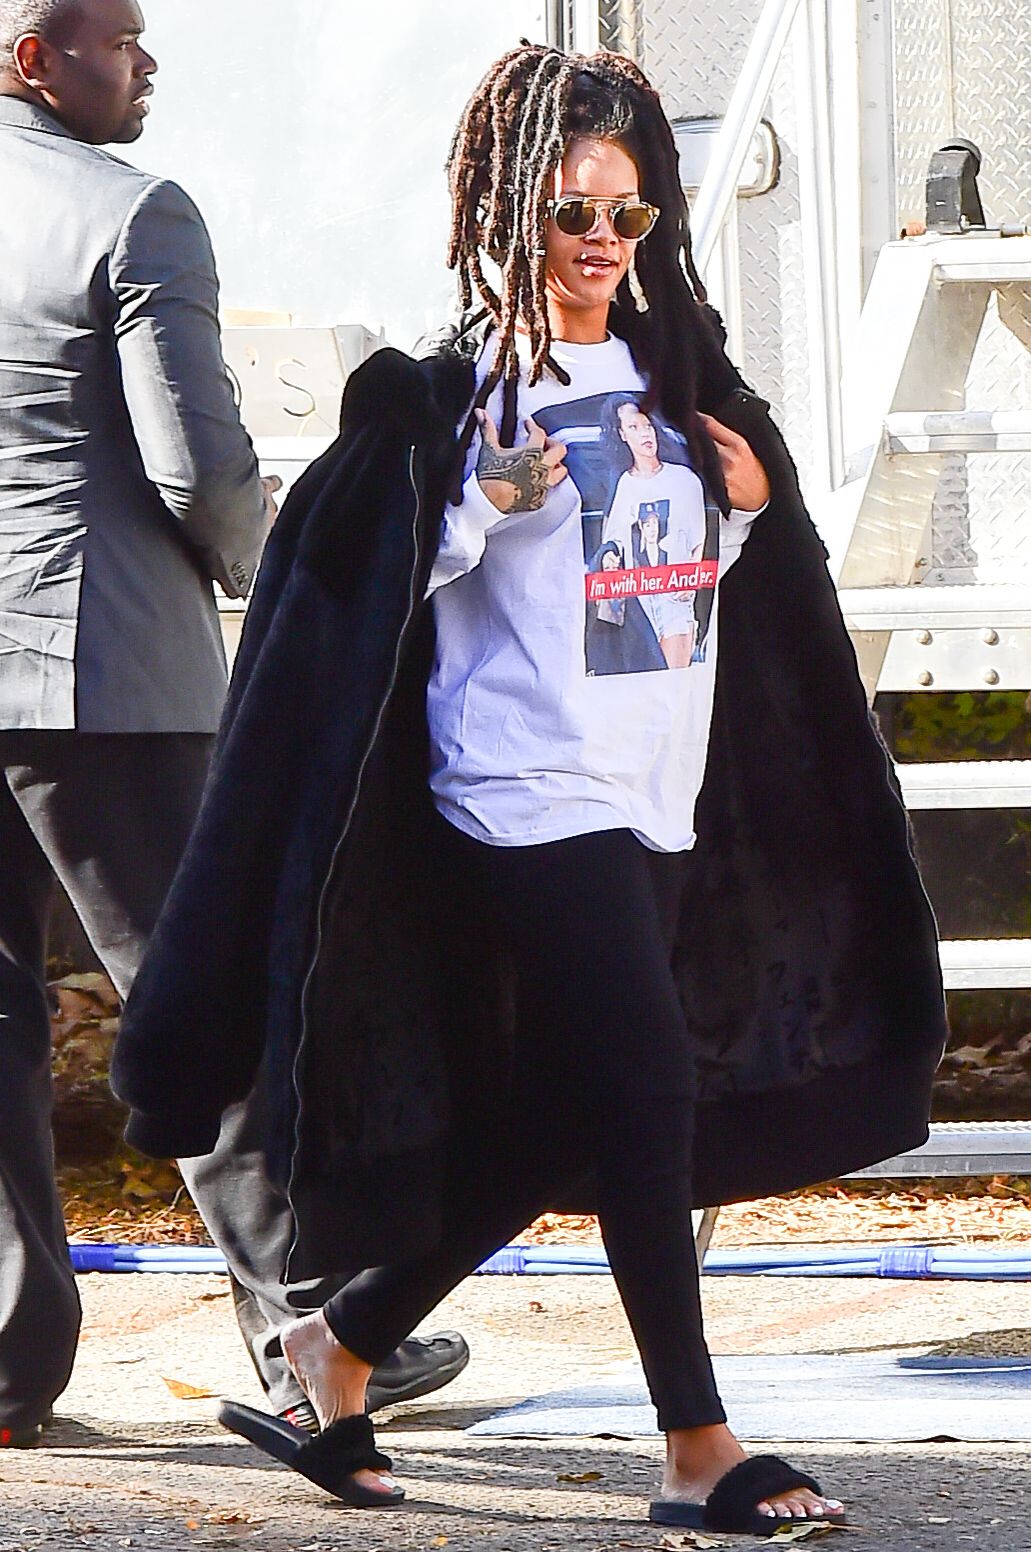 Rihanna Wears Shirt of Herself Wearing Hillary Clinton Shirt